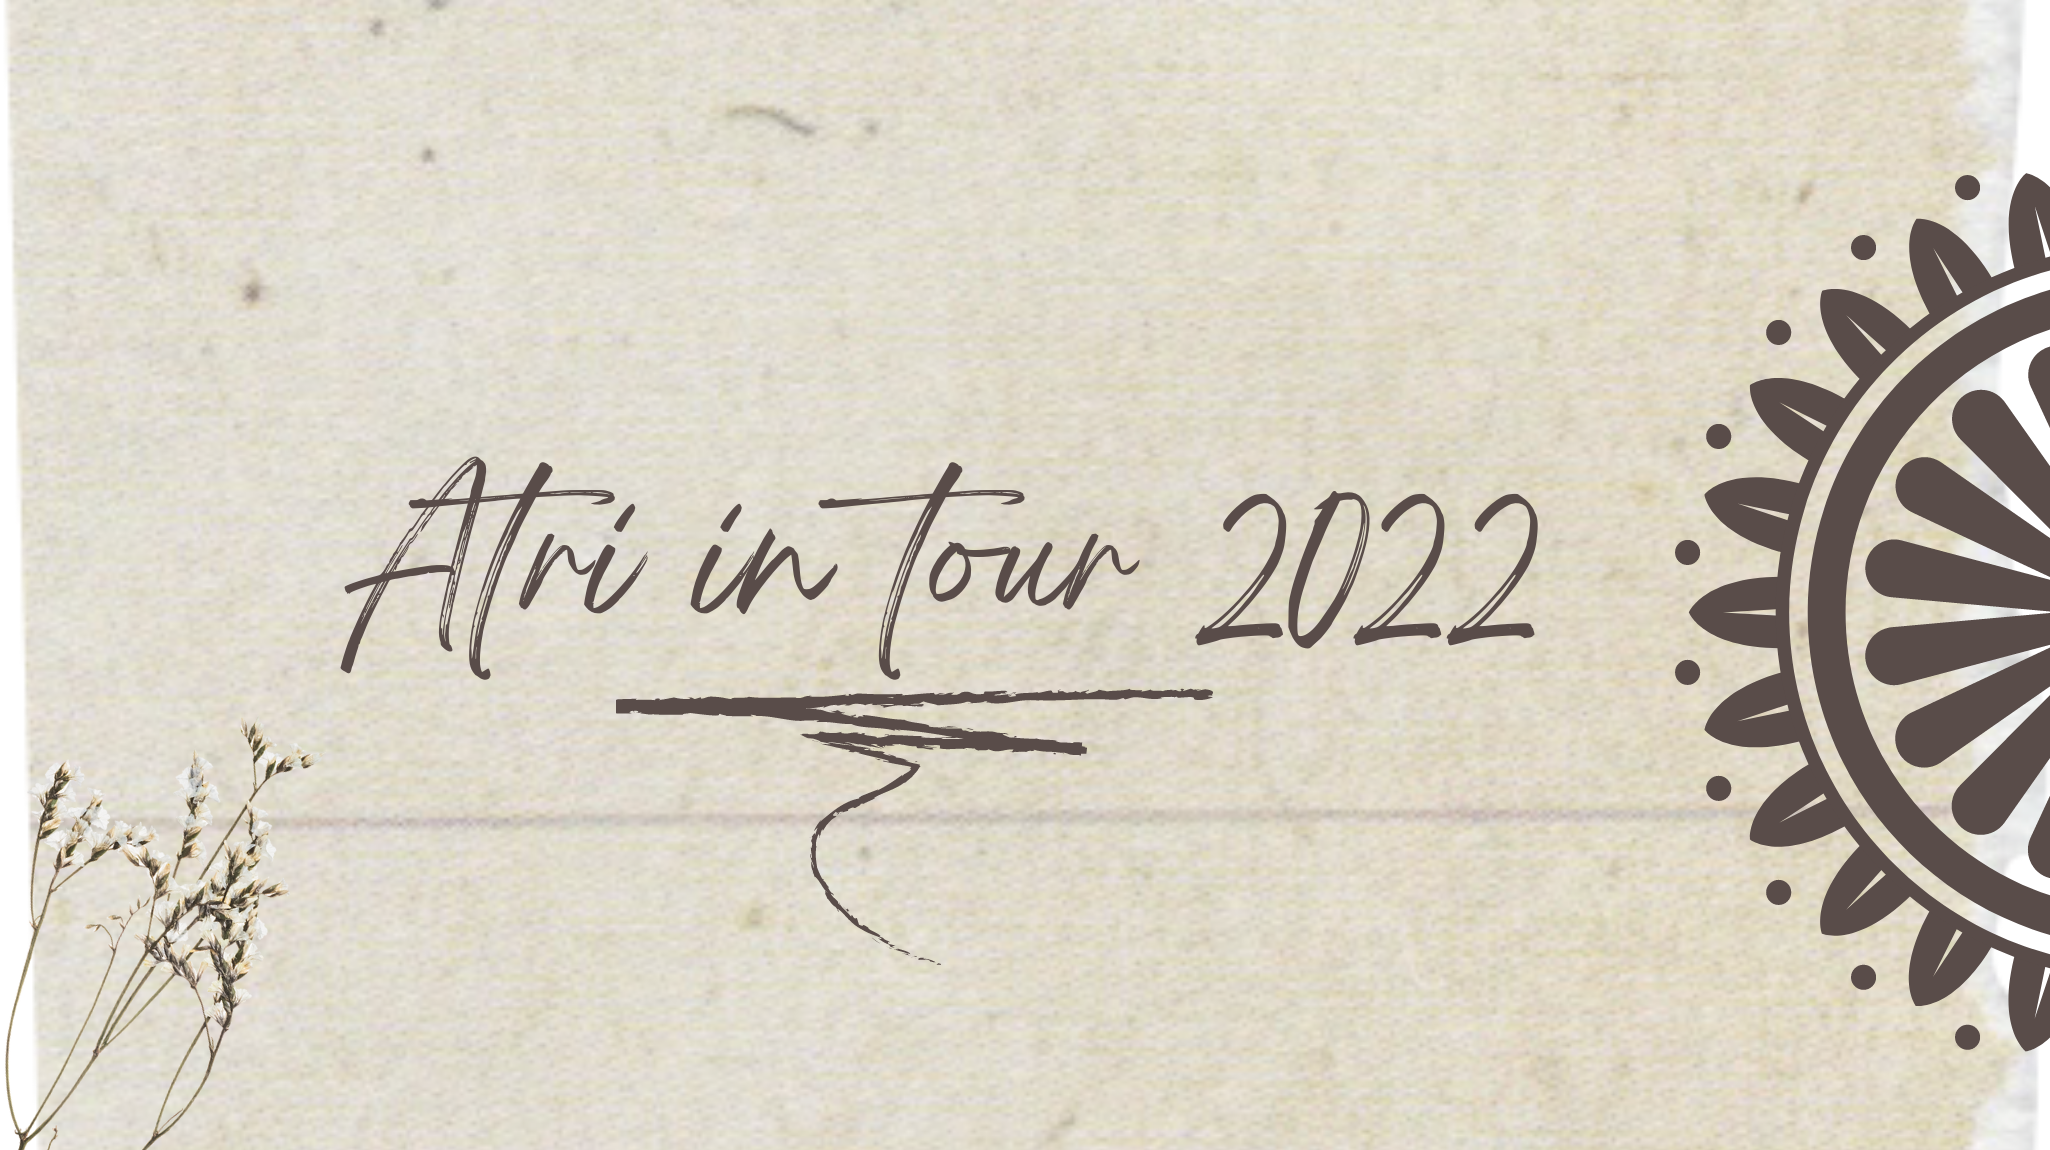 ATRI IN TOUR  2022